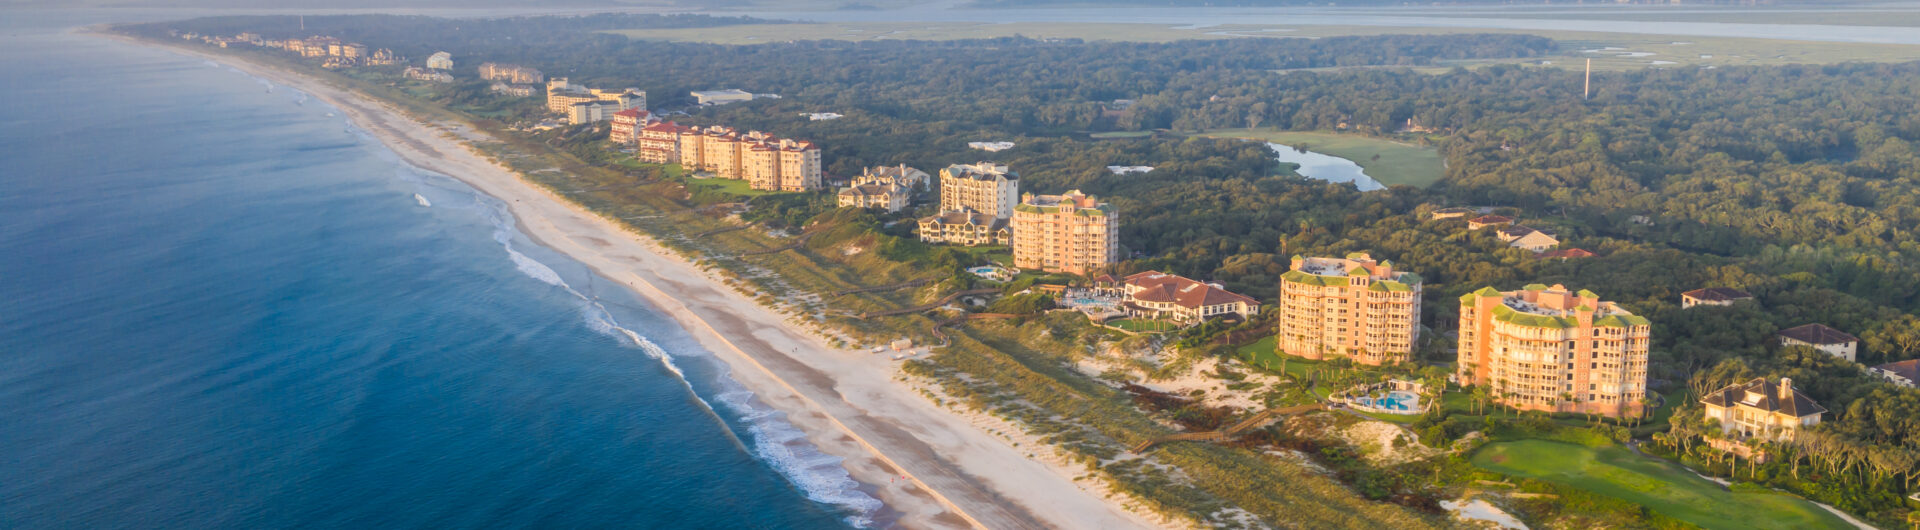 ocean shoreline with hotels